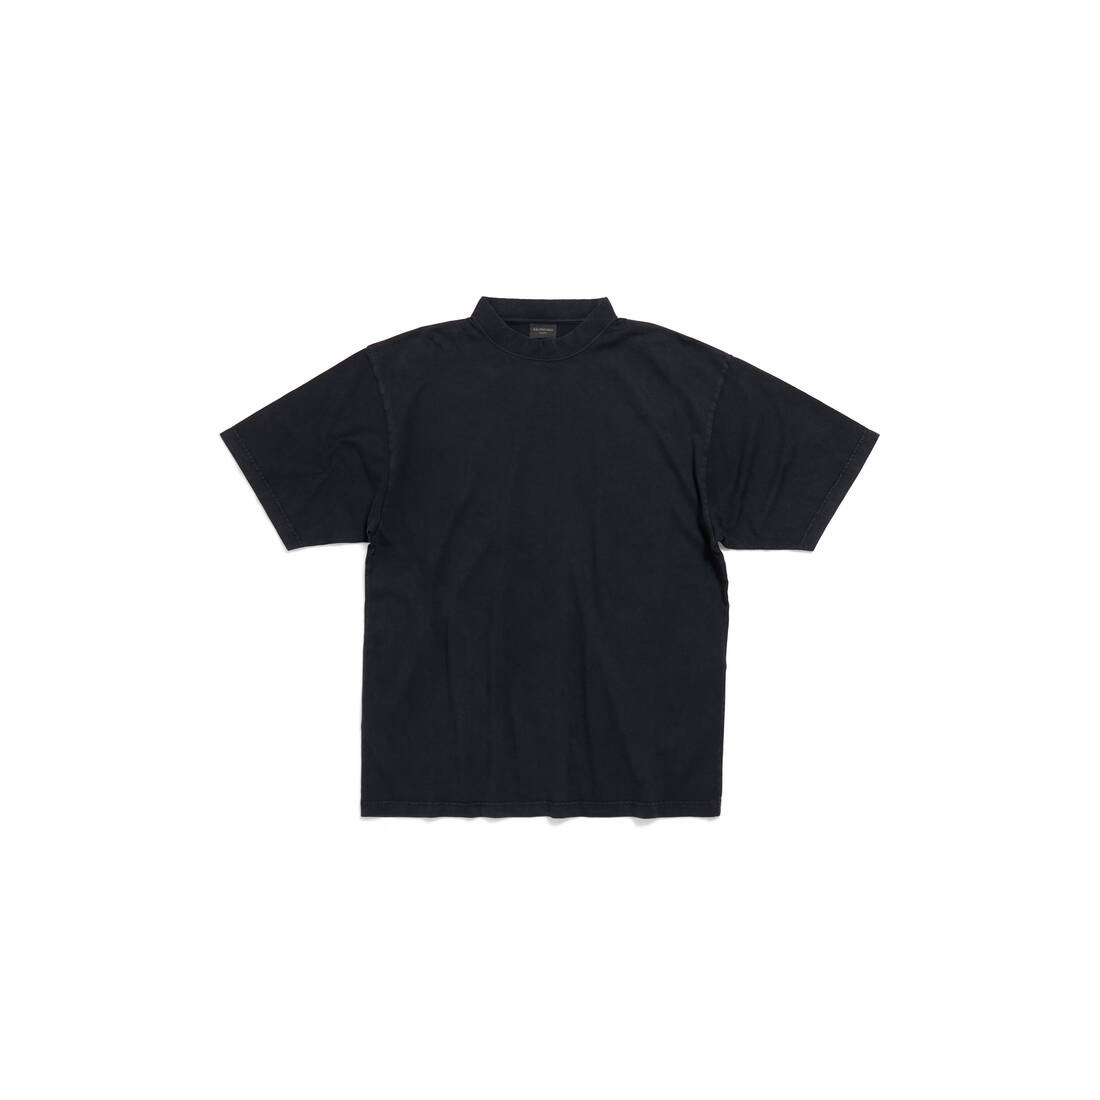 Balenciaga Hand-drawn T-shirt Medium Fit in Black Faded - 1